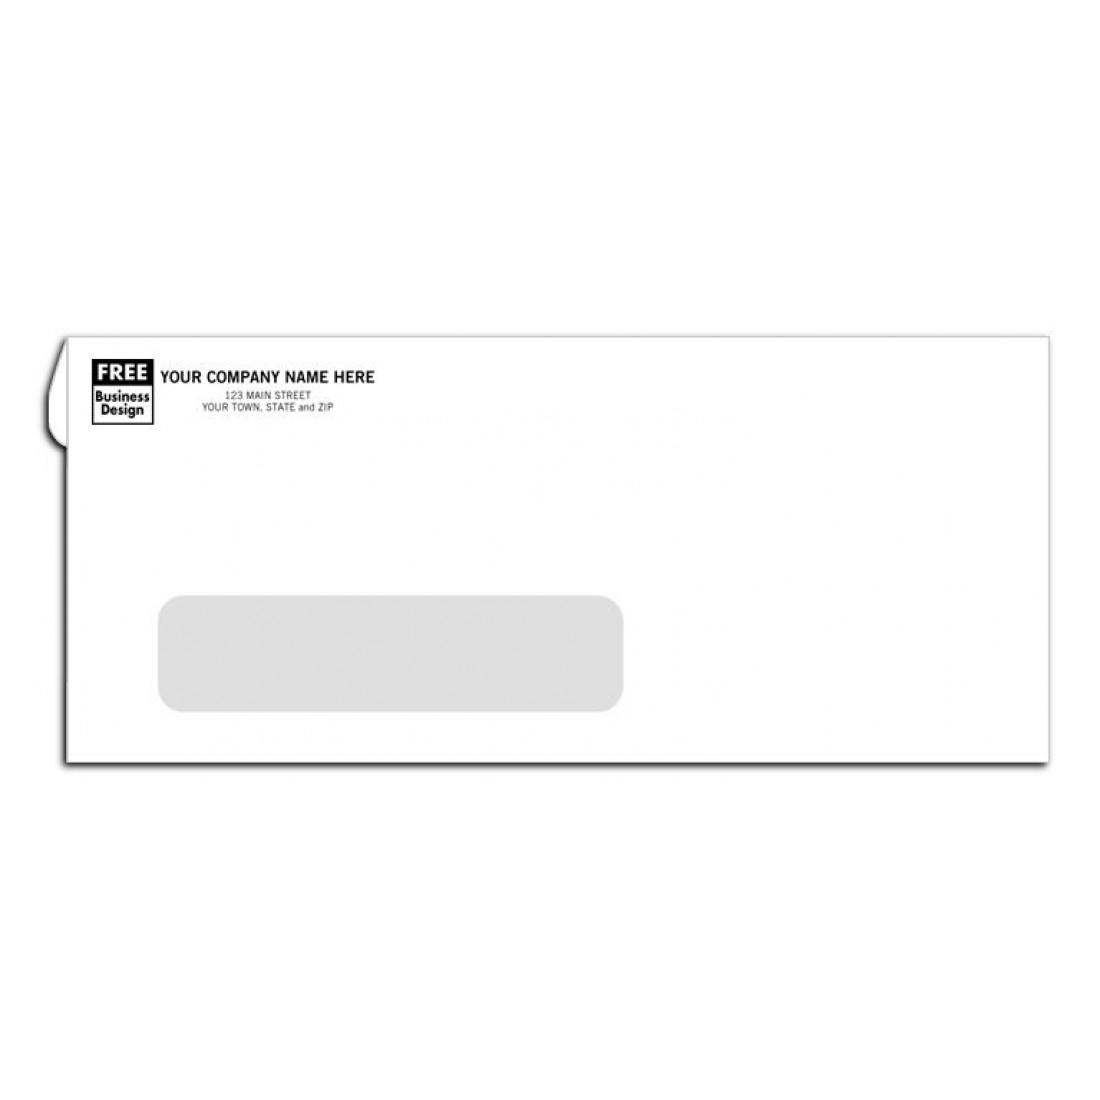 10 window envelope template with return address